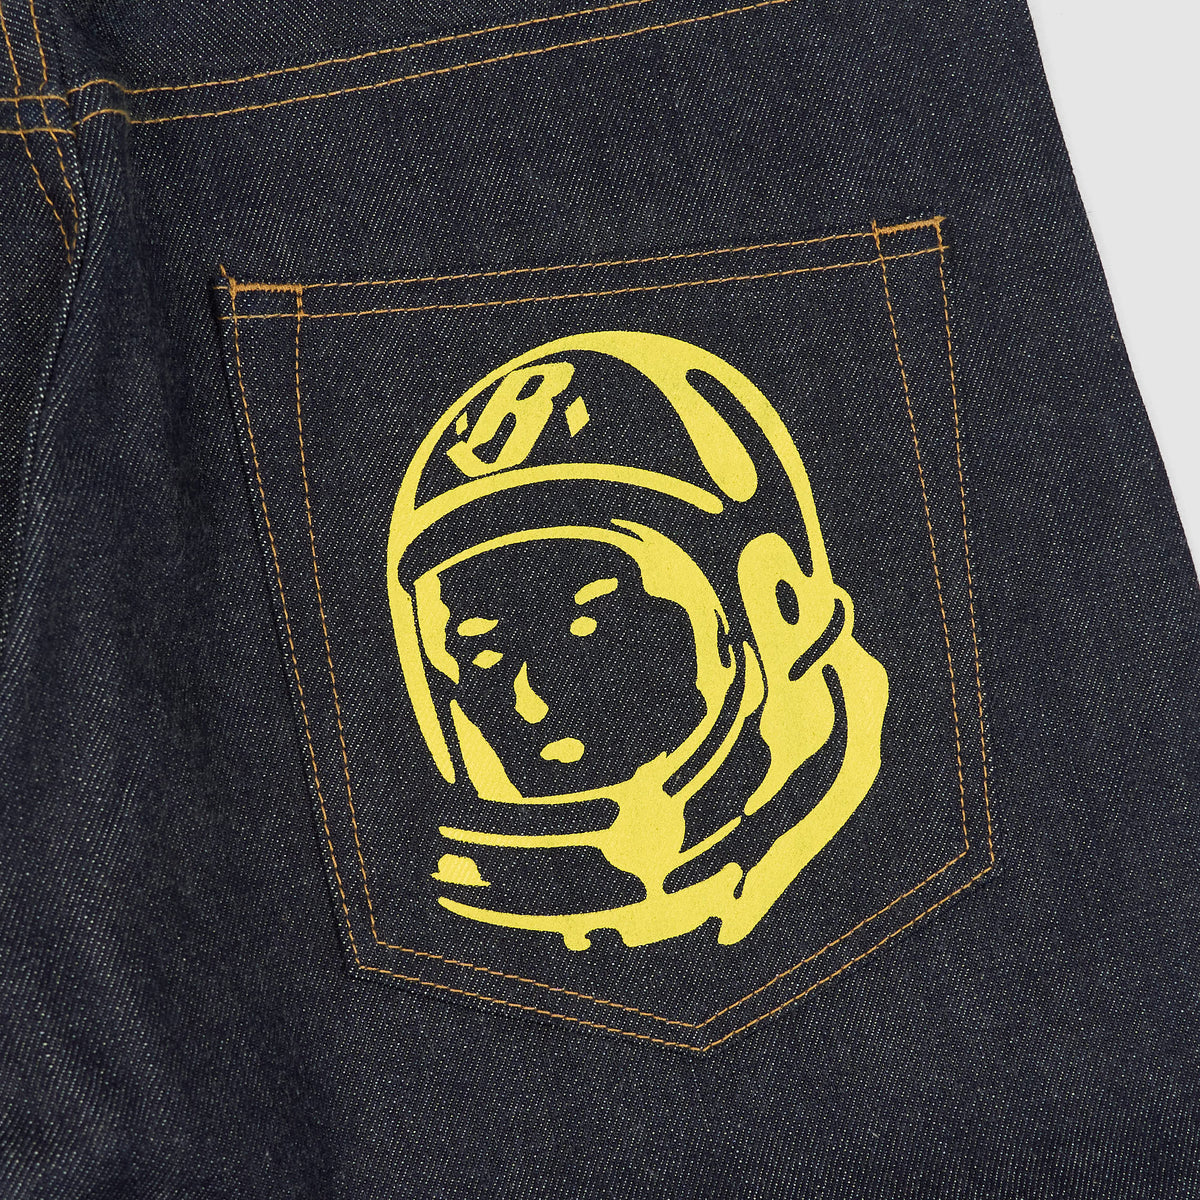 Billionaire Boys Club Printed Moon Man Raw Denim Jeans